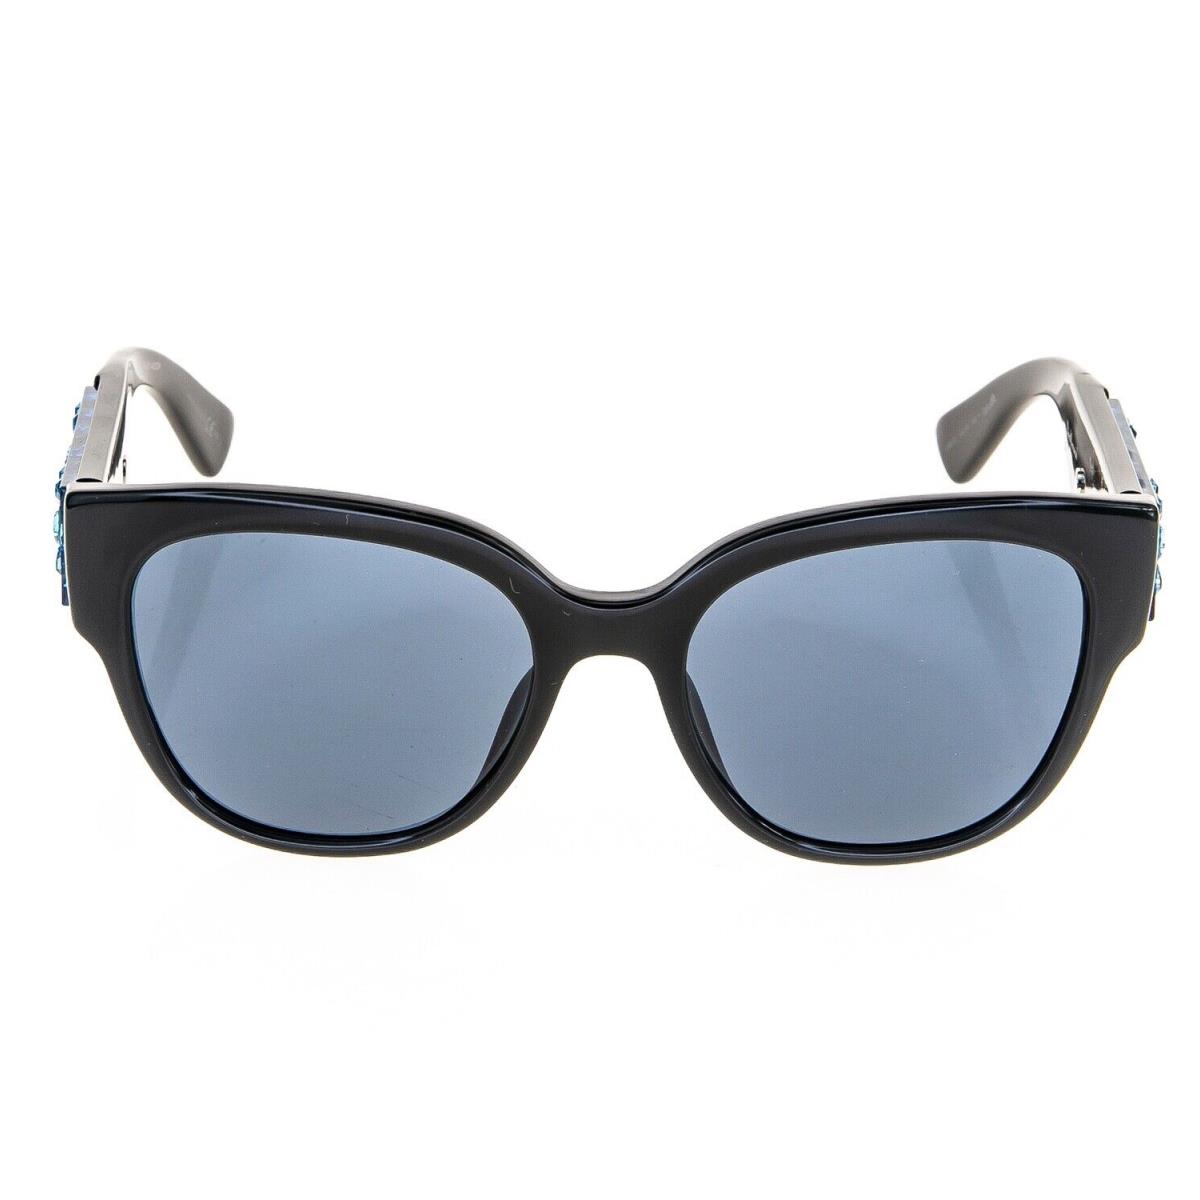 Dior sunglasses  - Frame: Black, Lens: Black